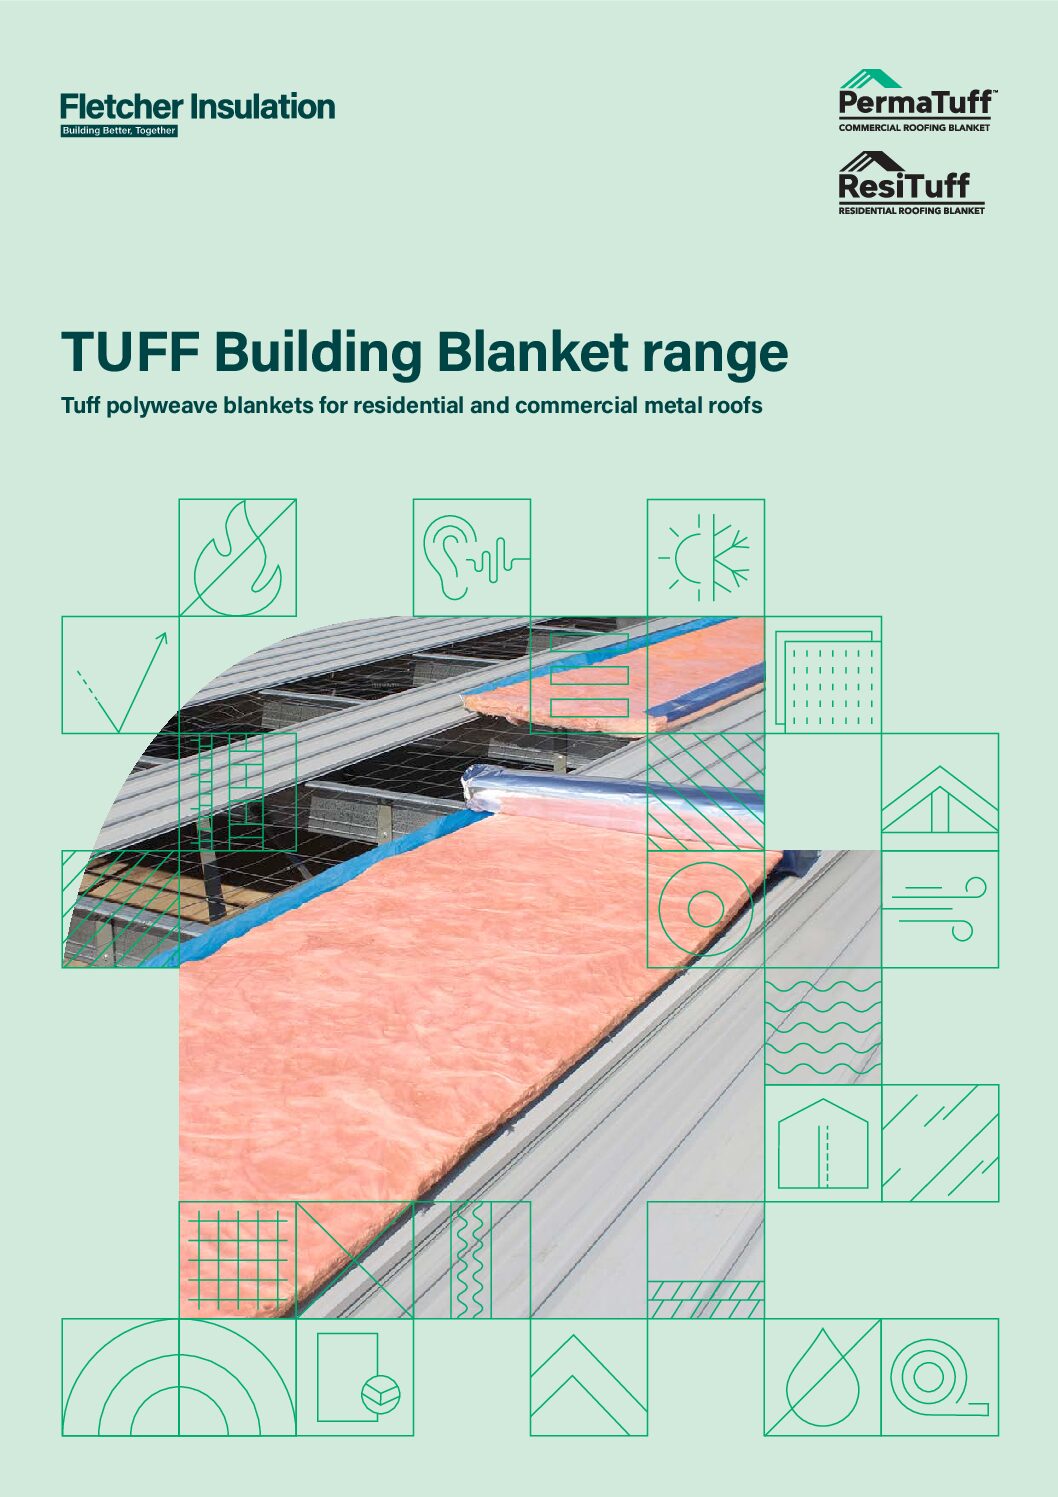 Tuff Building Blanket range brochure